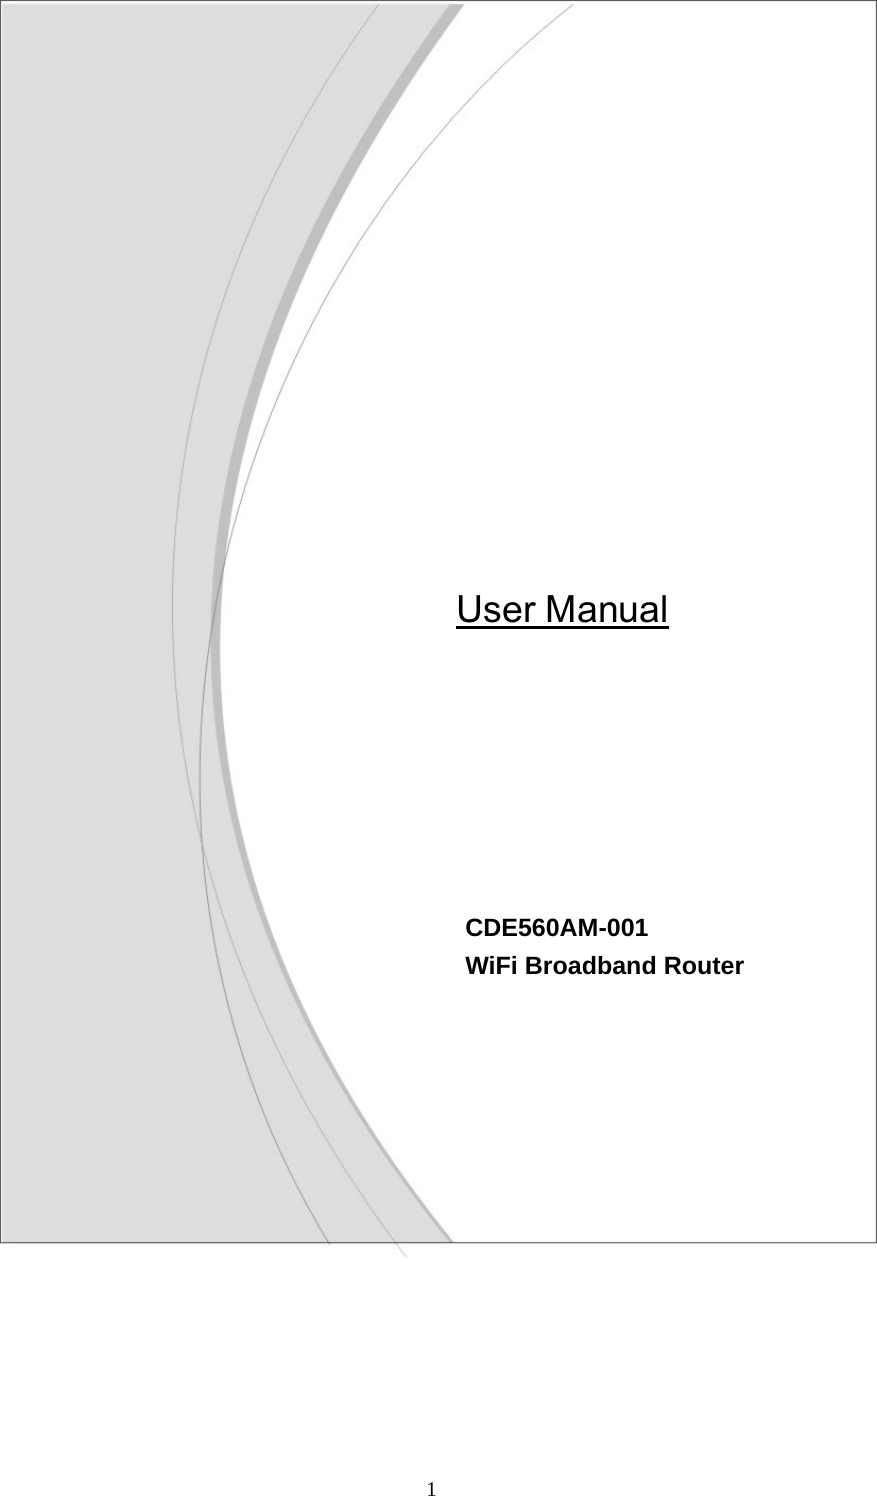  1  User Manual  CDE560AM-001  WiFi Broadband Router 